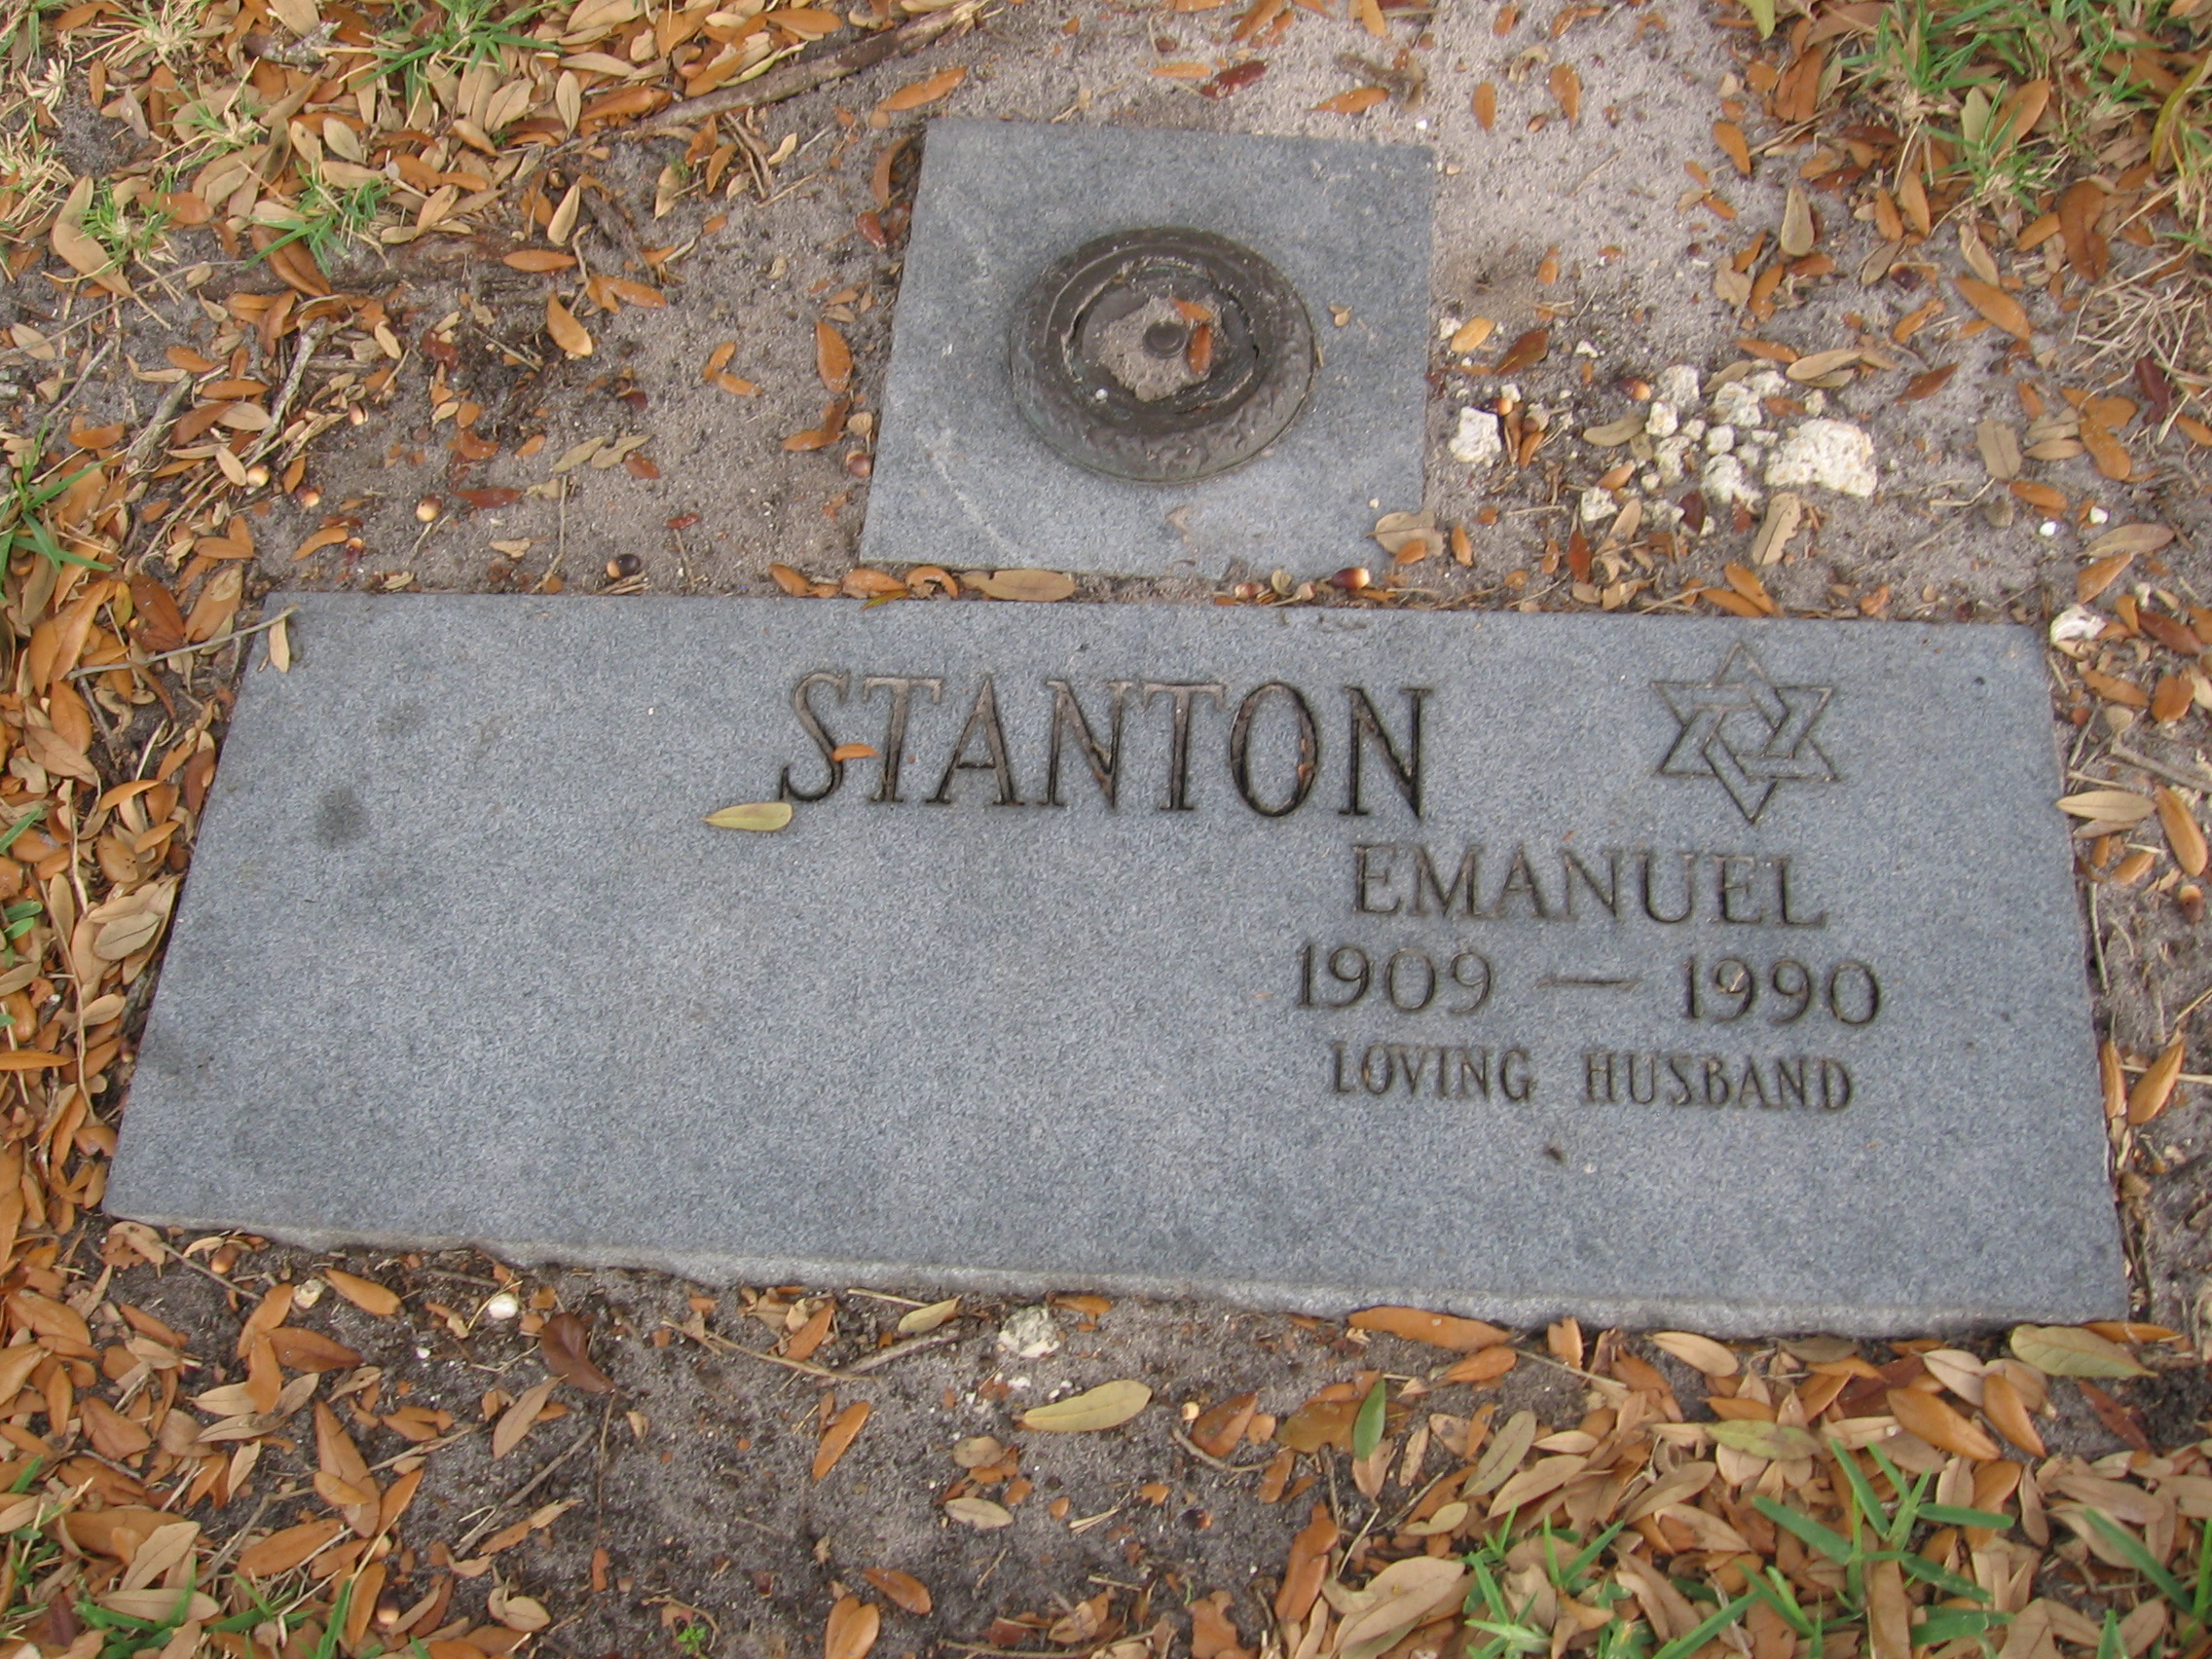 Emanuel Stanton